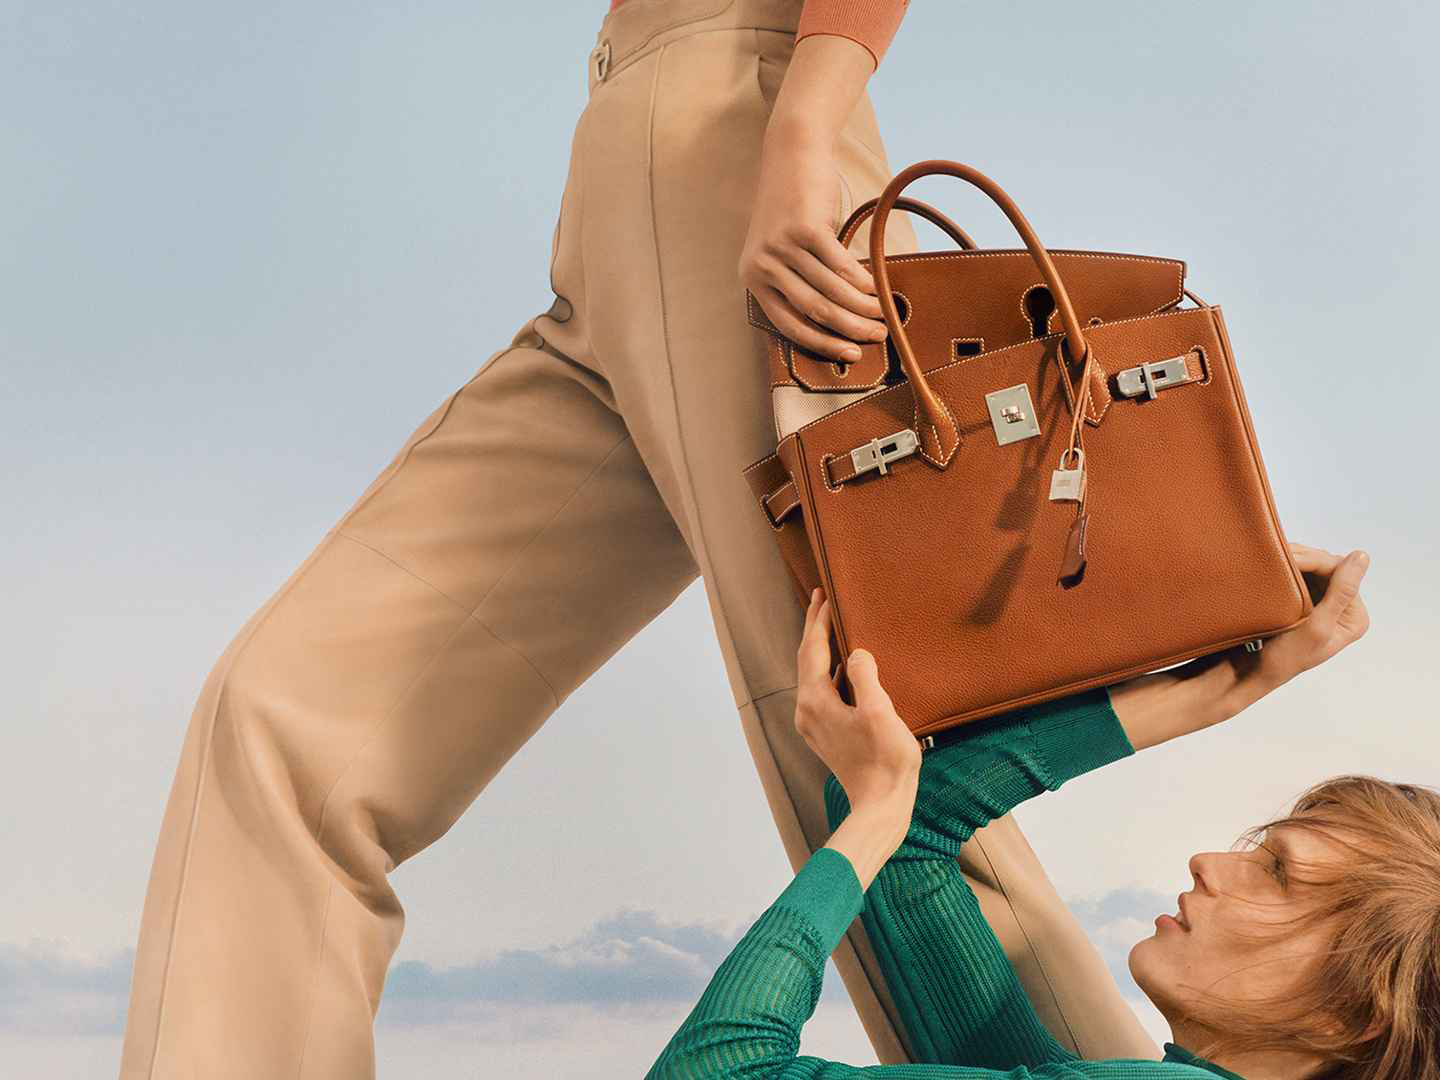 An ad campaign featuring an Hermes Birkin bag